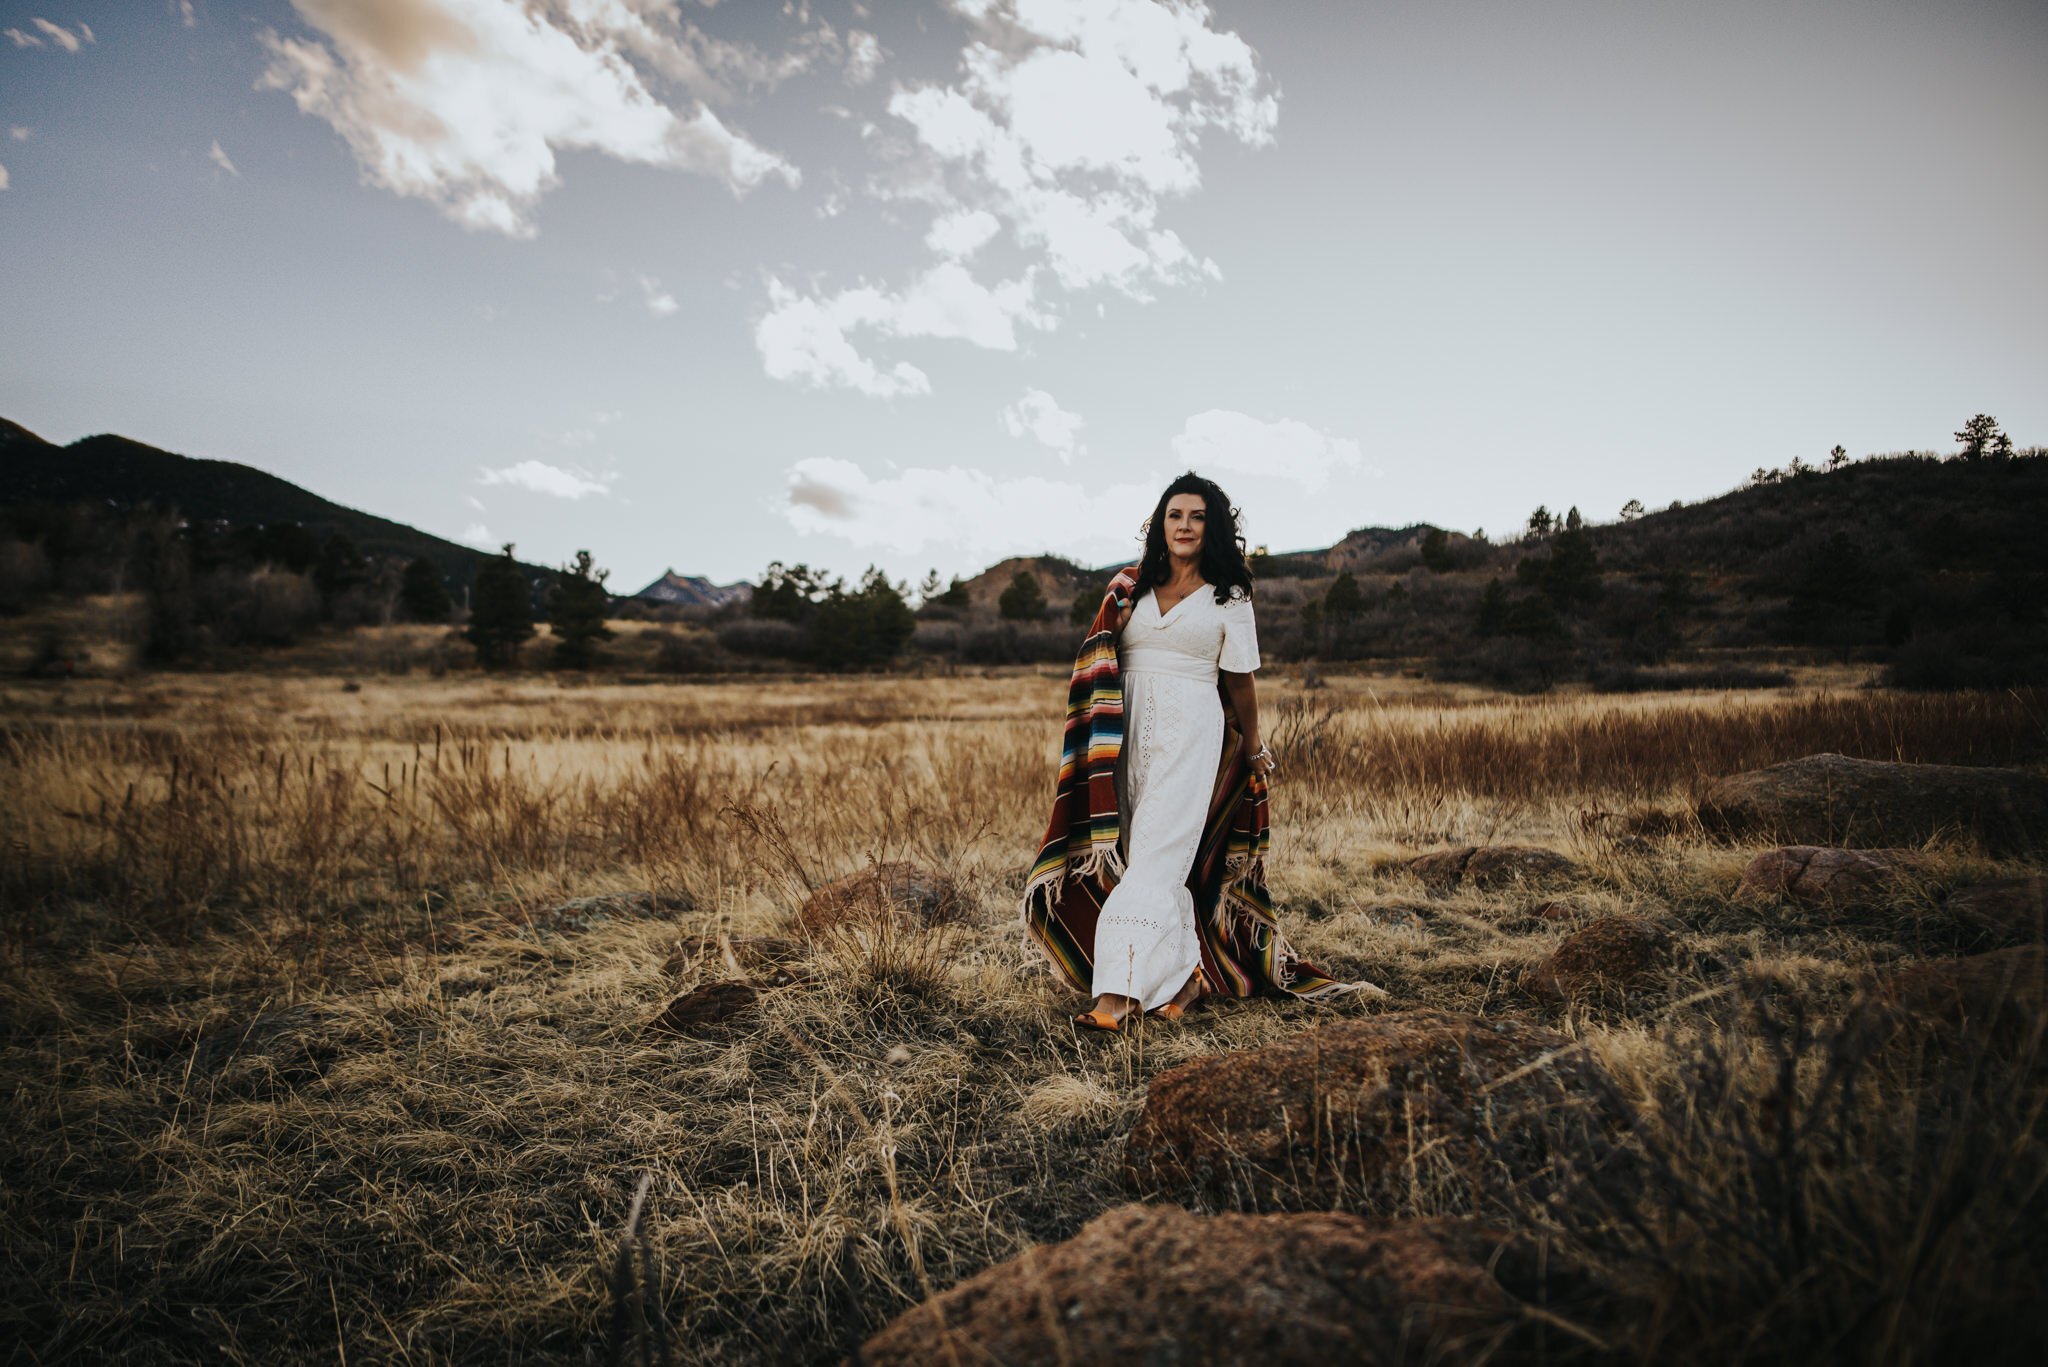 Celi+Turner+Headshots+Colorado+Springs+Colorado+Sunset+Mountains+Field+Woman+Wild+Prairie+Photography-27-2020.jpeg